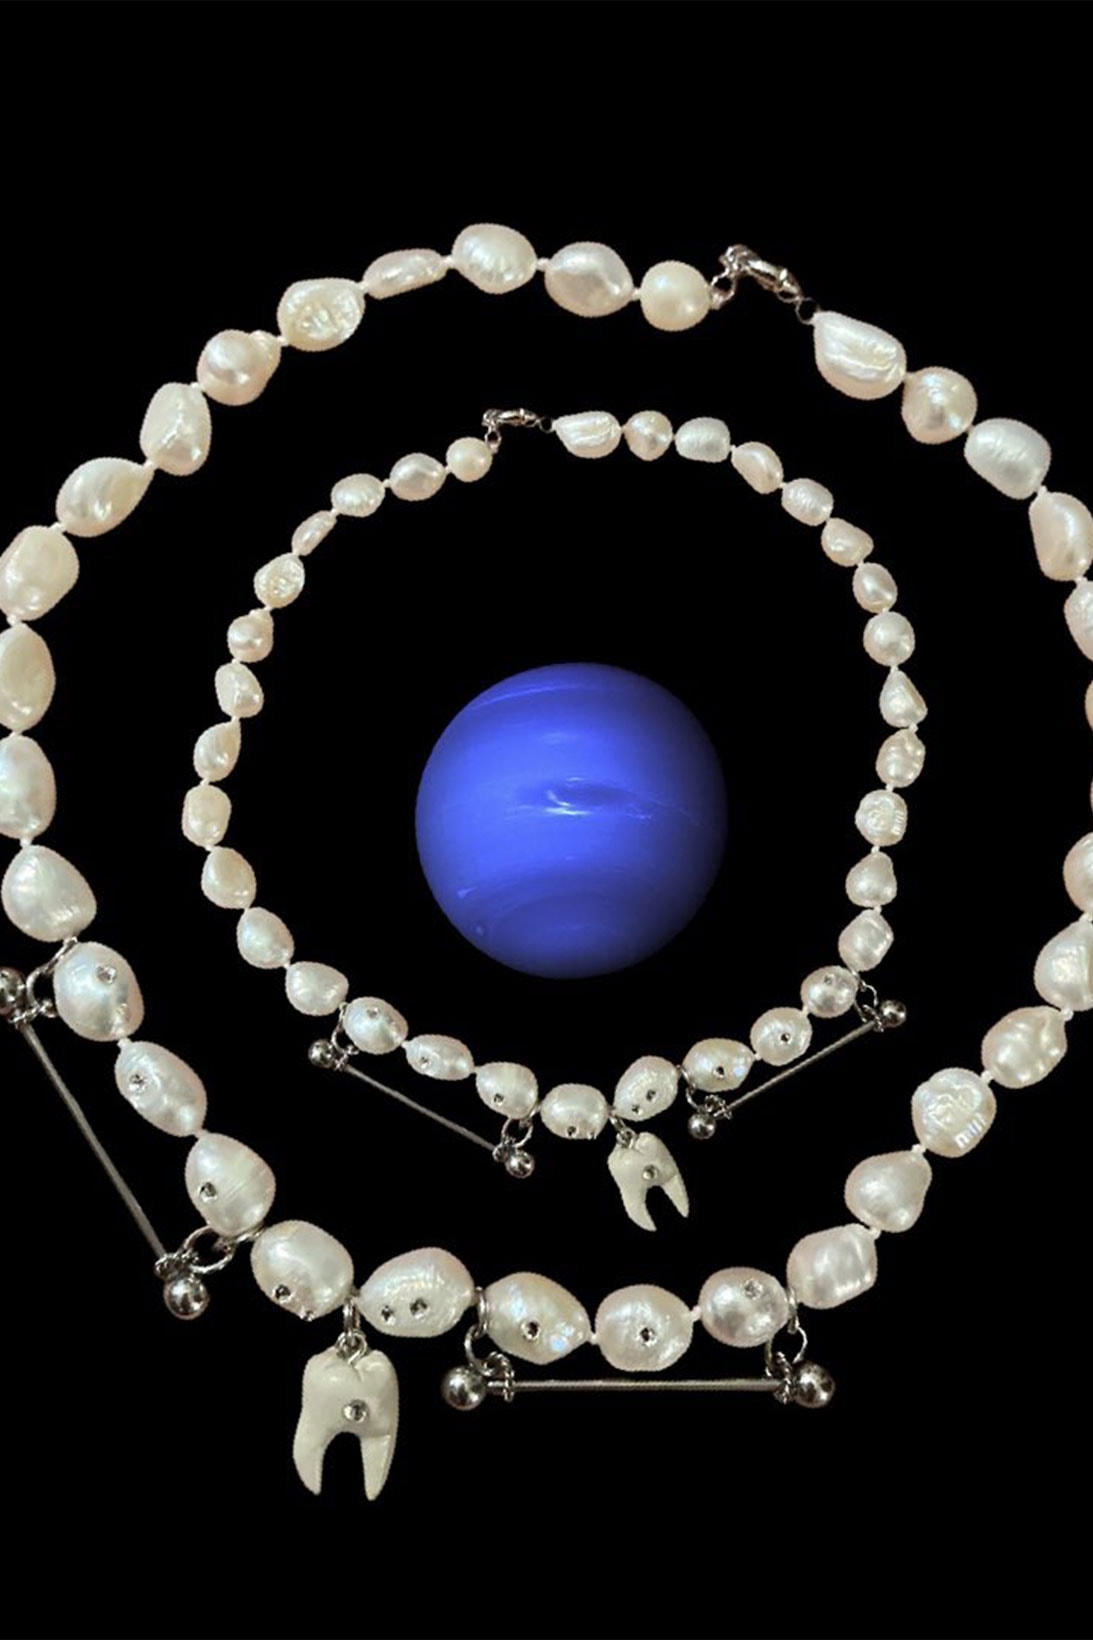 Twelve Jewelry Necklaces Bone Pendant Teeth Pearls Planet